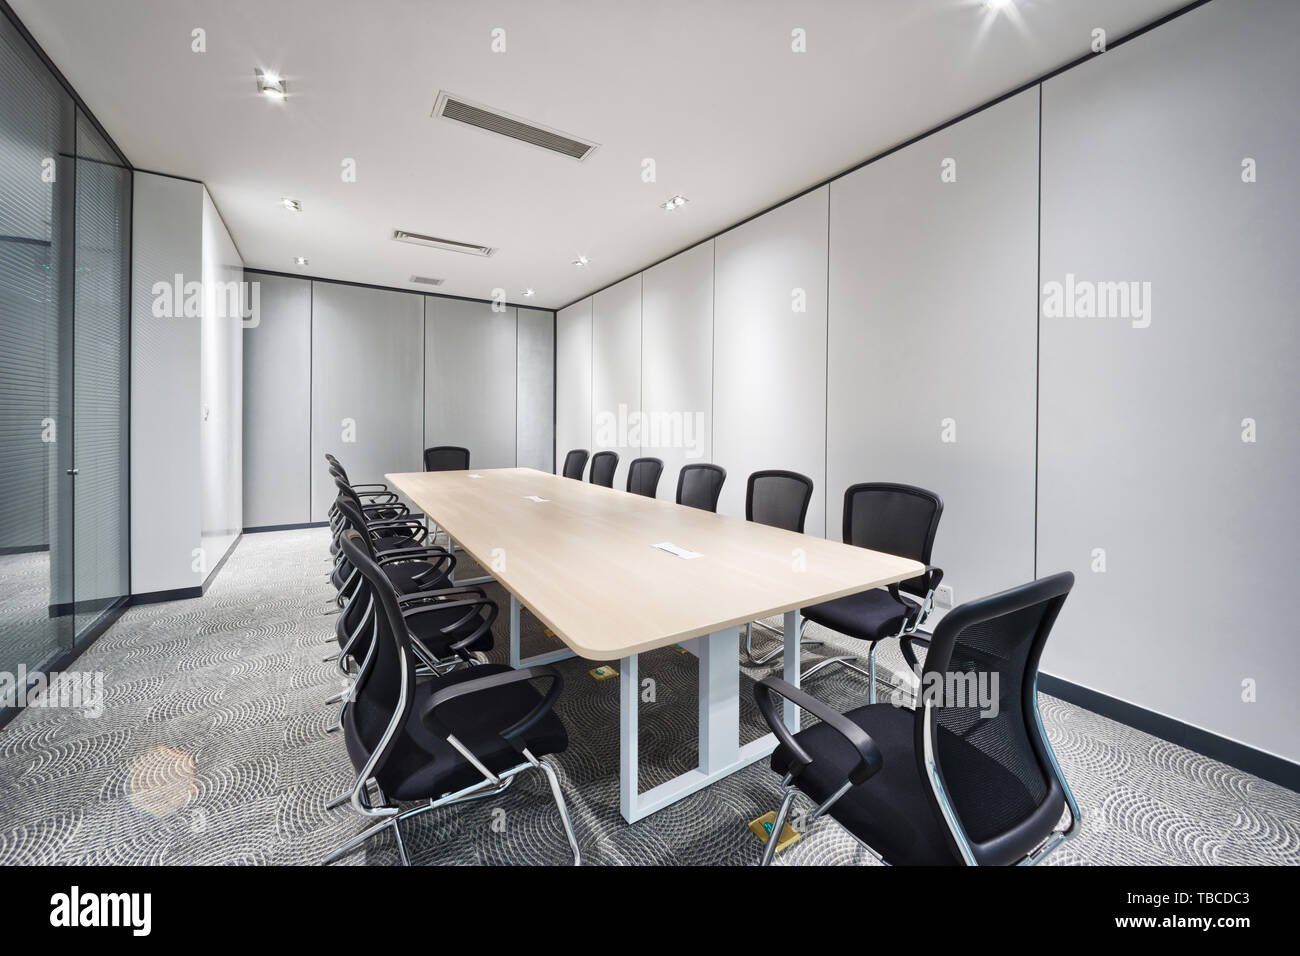 Modern Office Meeting Room Interior Stock Photo 247980323